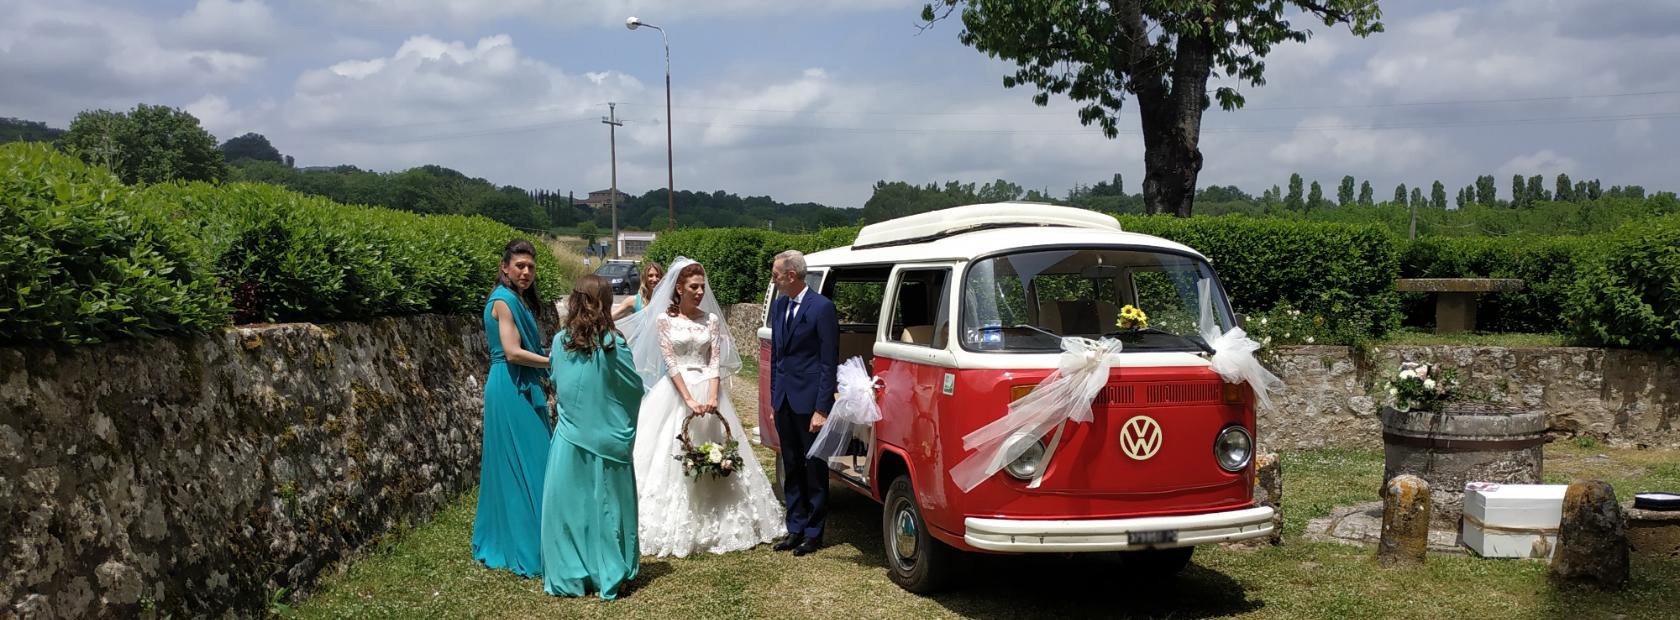 Volkswagen wedding minibus hire Tuscany - Umbria